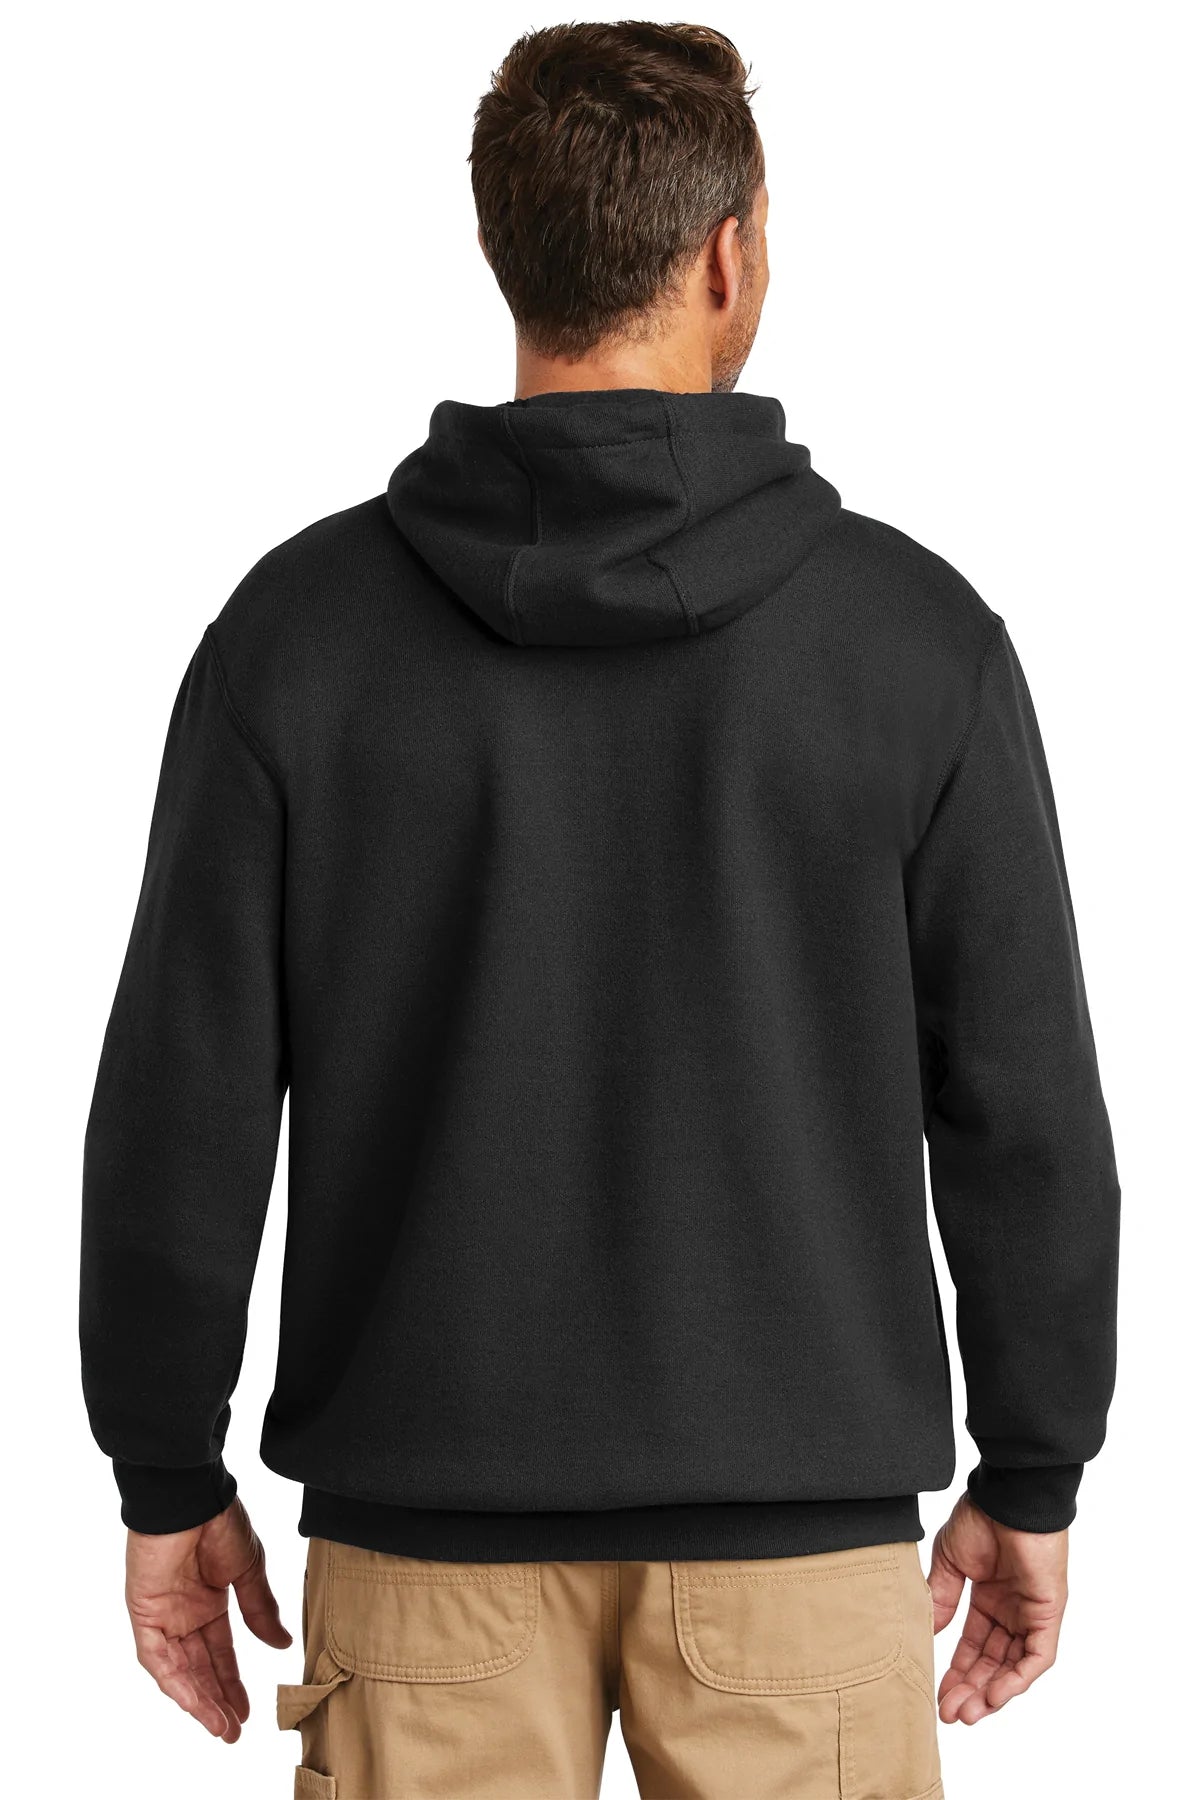 Carhartt Tall Hooded Custom Sweatshirts, Black